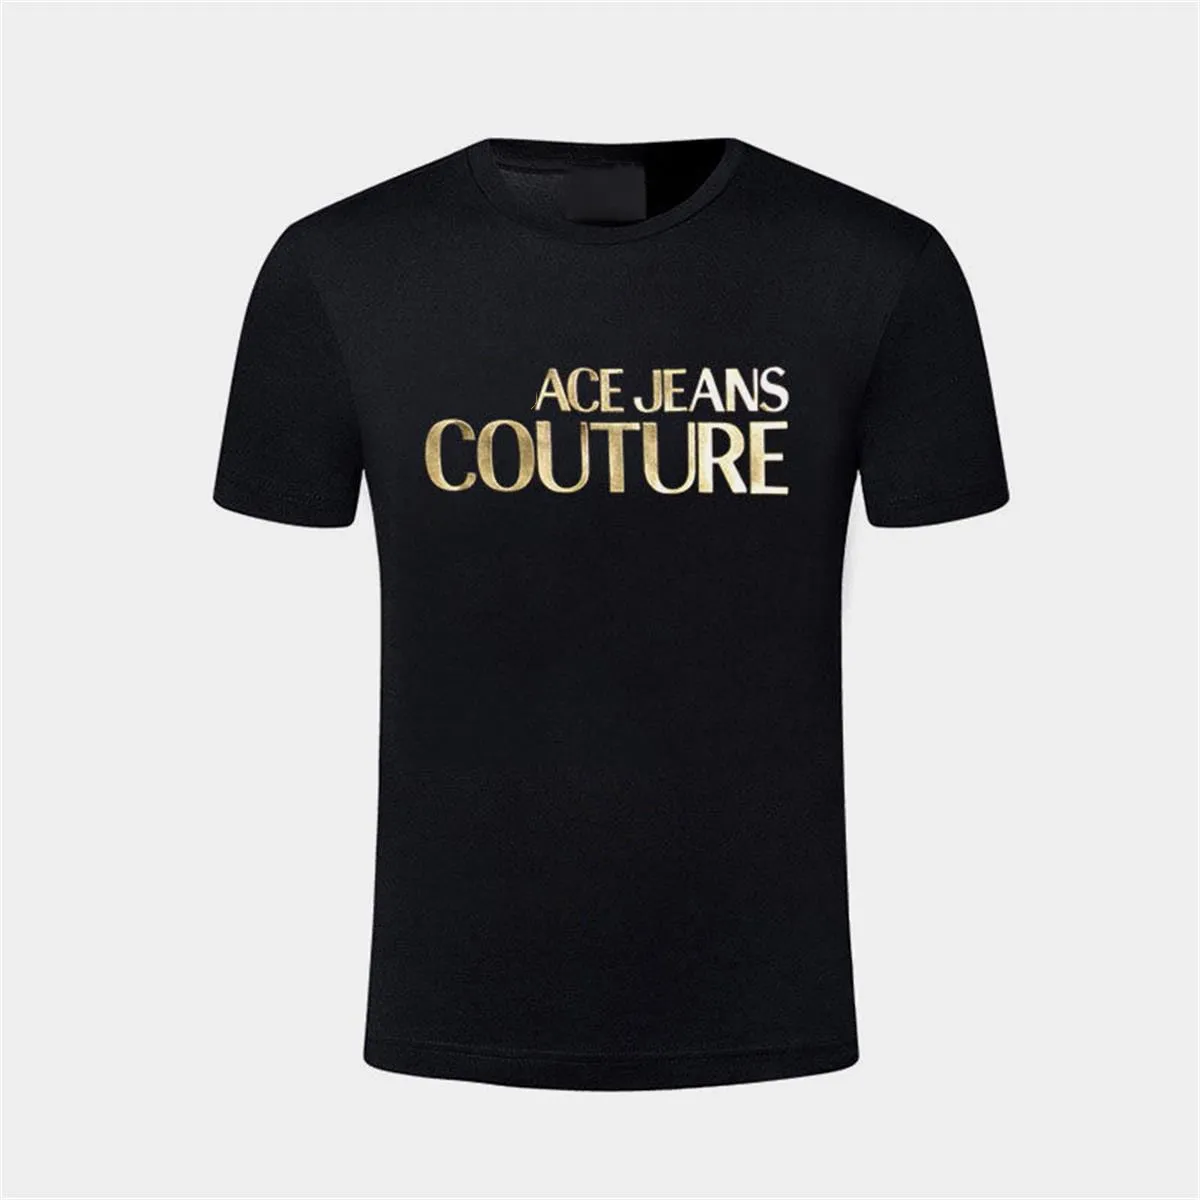 T Shirt Designer Tshirt Camicie per uomo Donna Ragazza Sweat Tee Shirts Stampa T-shirt casual traspirante Cotone Taglia S-5XL